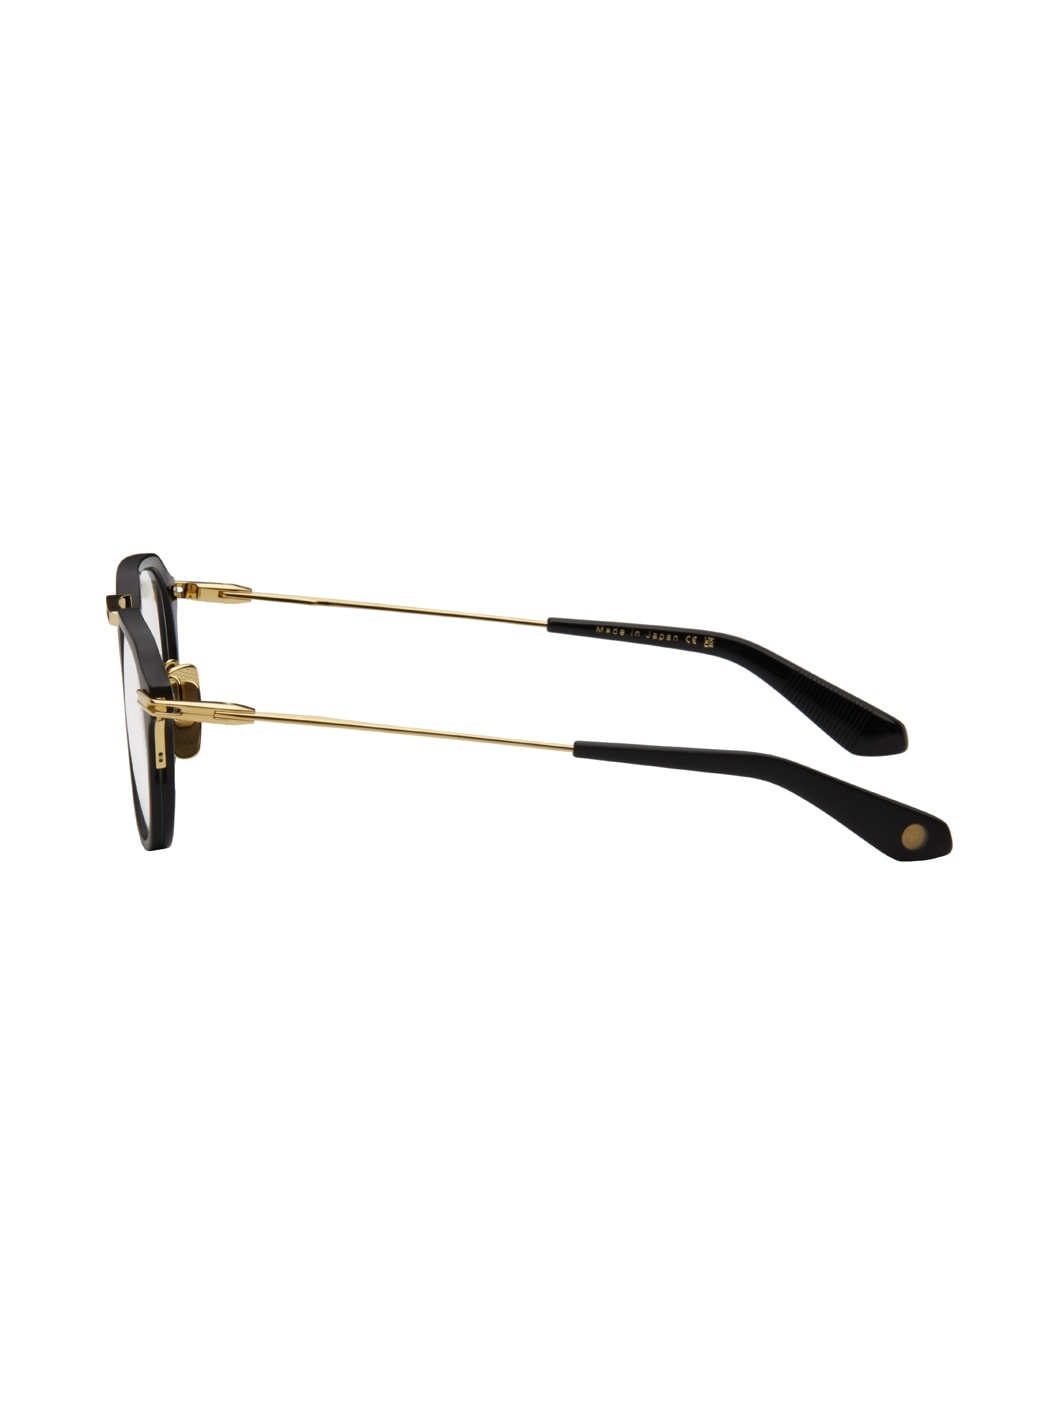 Black & Gold Altrist Glasses - 3